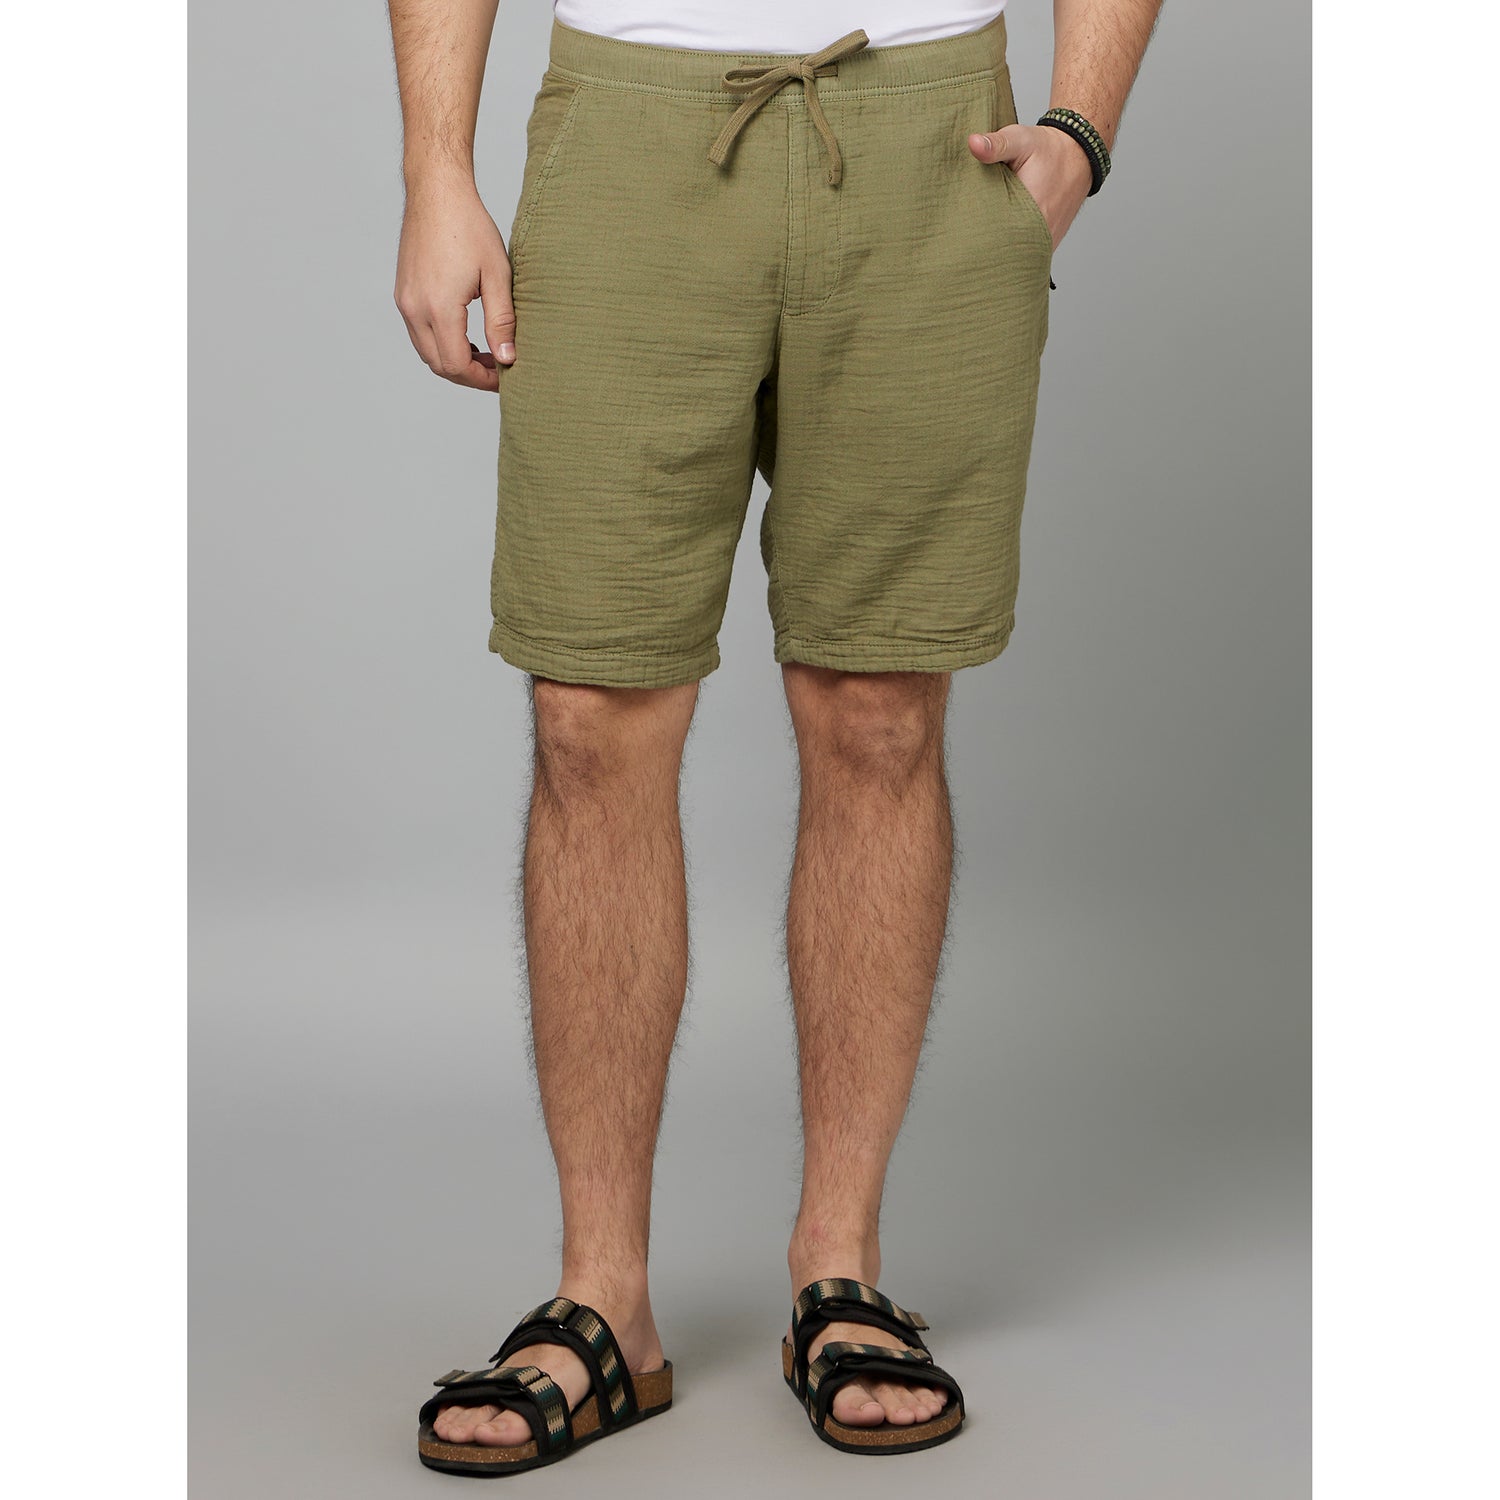 Olive Green Mid-Rise Regular Fit Casual Shorts (FOBOGAZEBM)